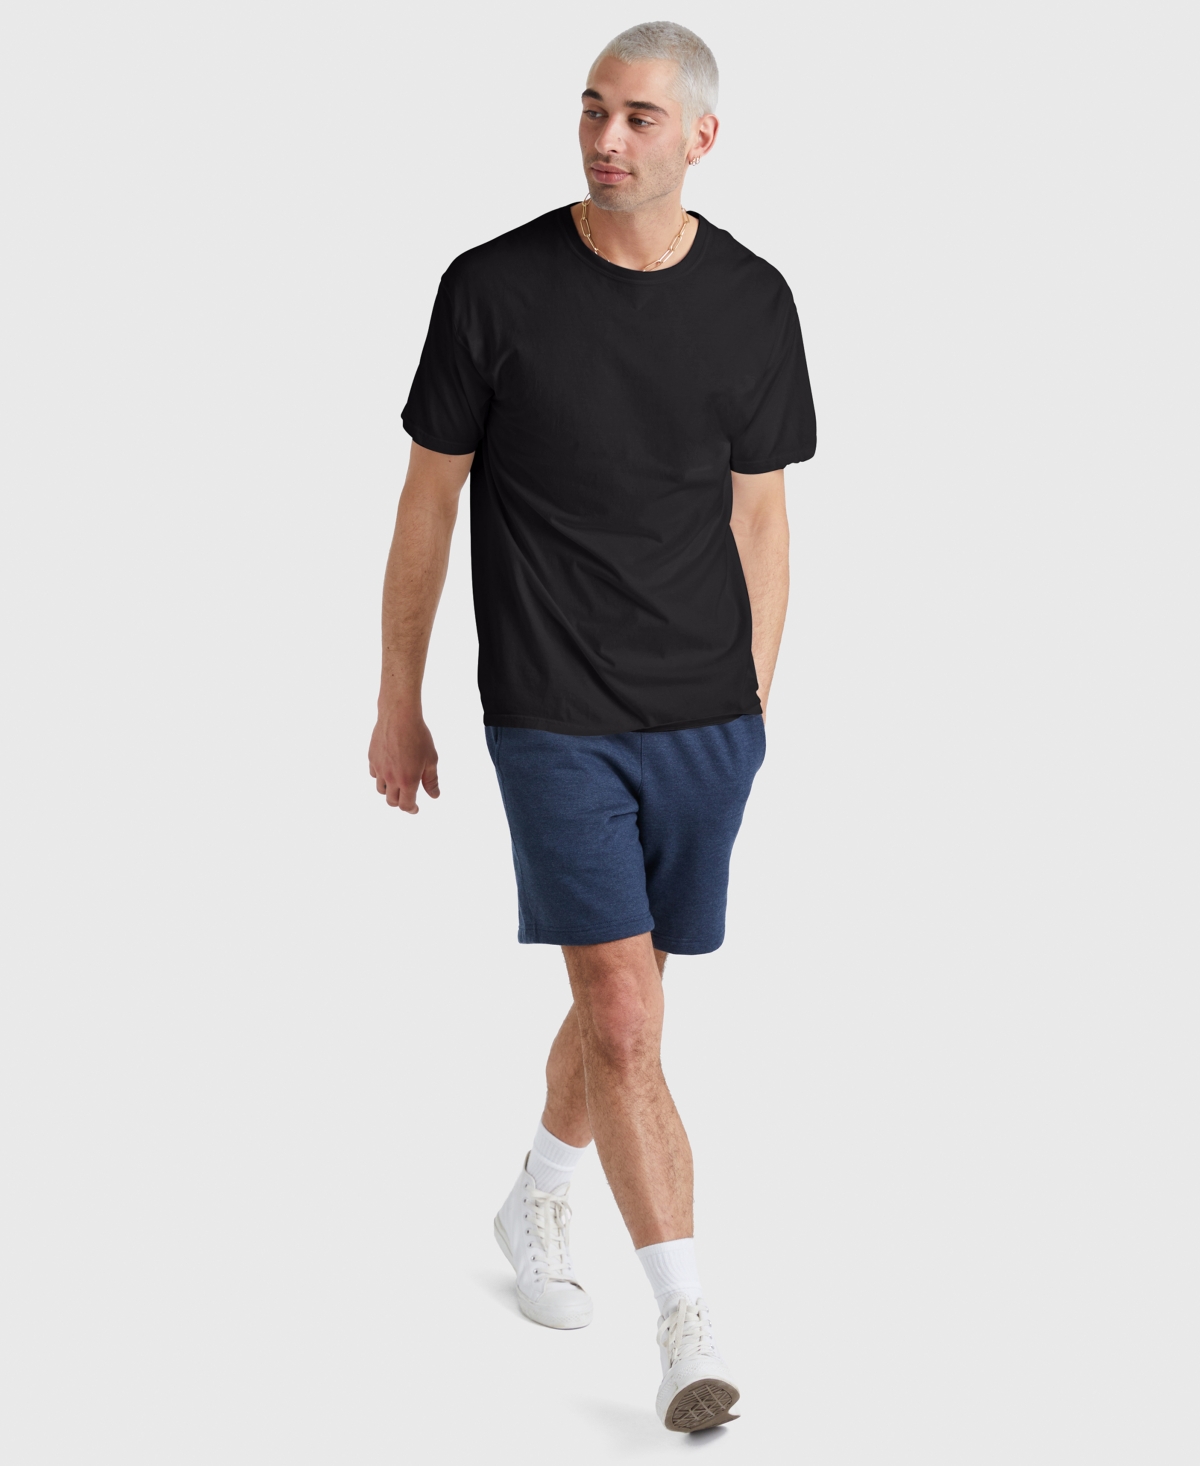 Hanes Unisex Garment Dyed Cotton T-shirt In Black